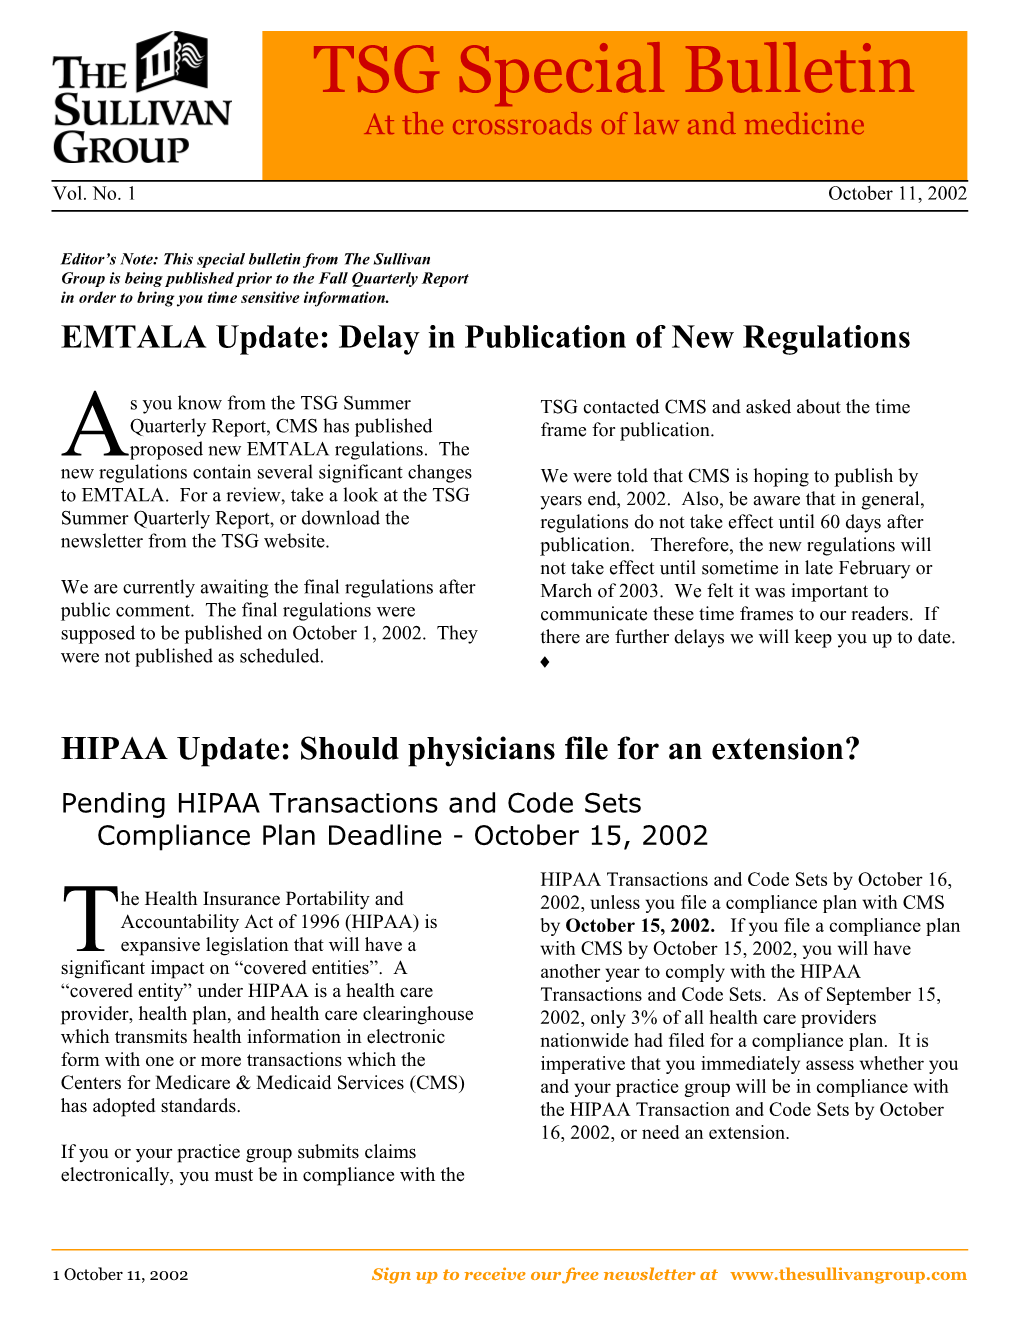 EMTALA Update: Delay in Publication of New Regulations